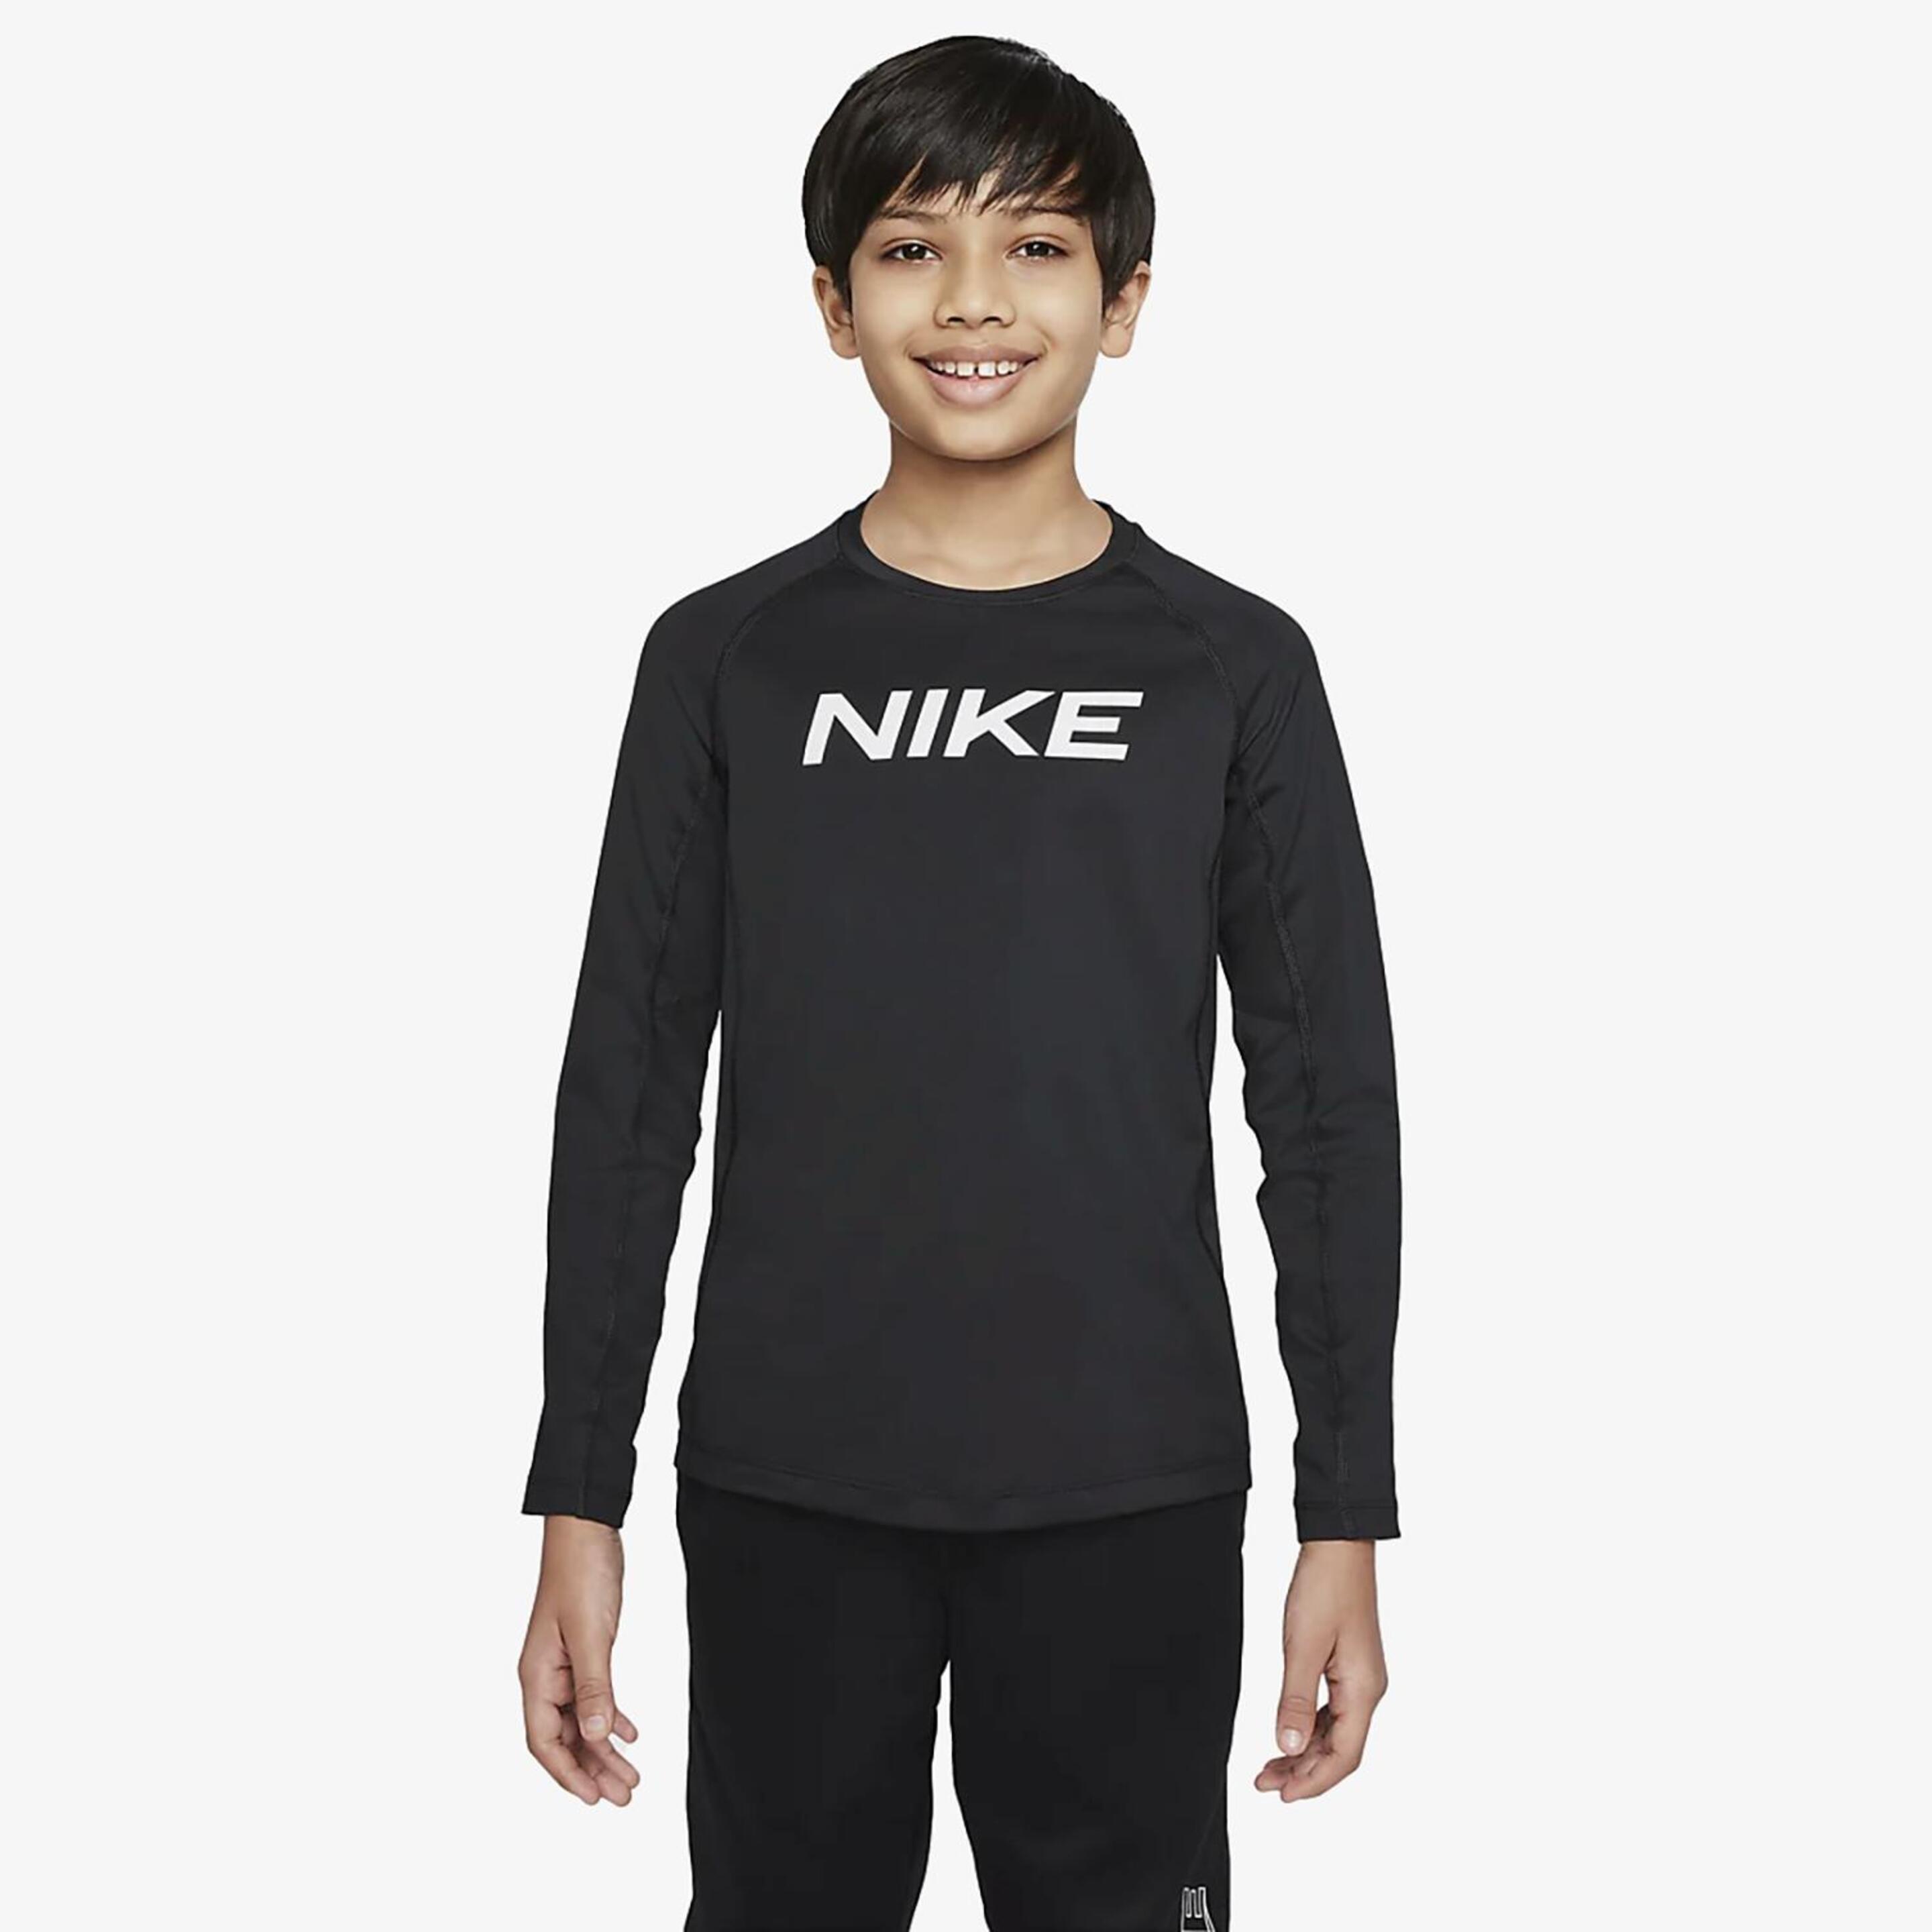 Camiseta Nike - negro - Camiseta Manga Larga Niño